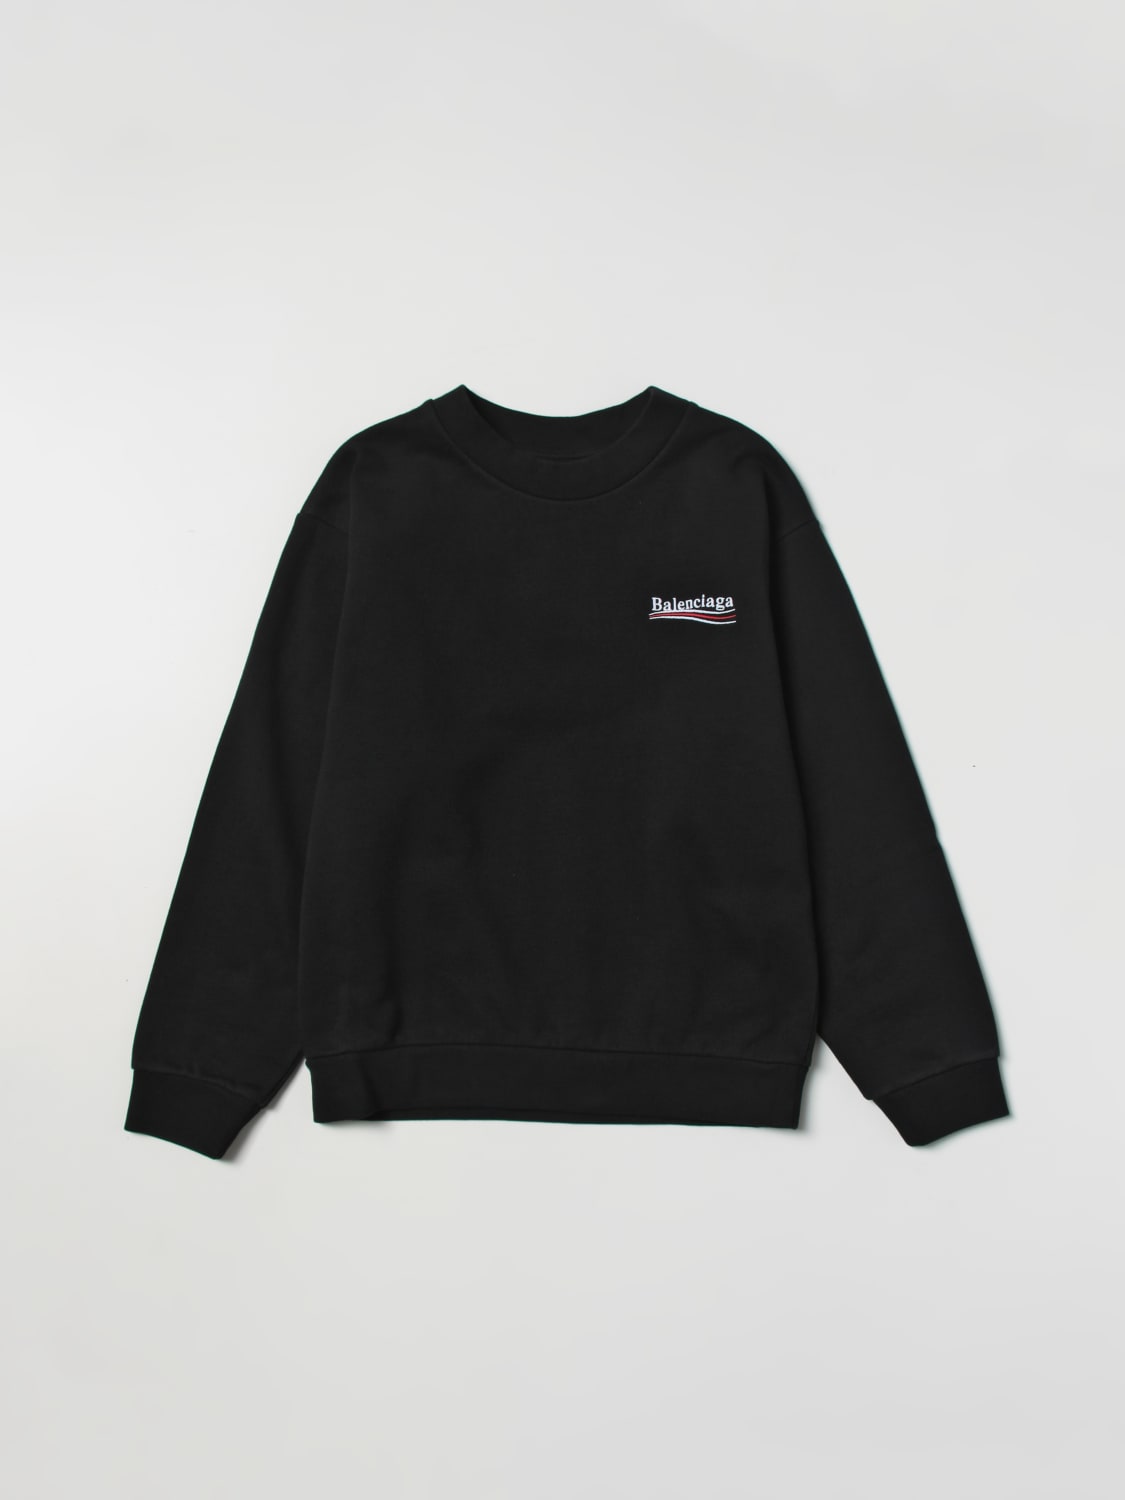 BALENCIAGA: cotton sweatshirt with Political Campaign logo Black  Balenciaga sweater 682018TMVE6 online on